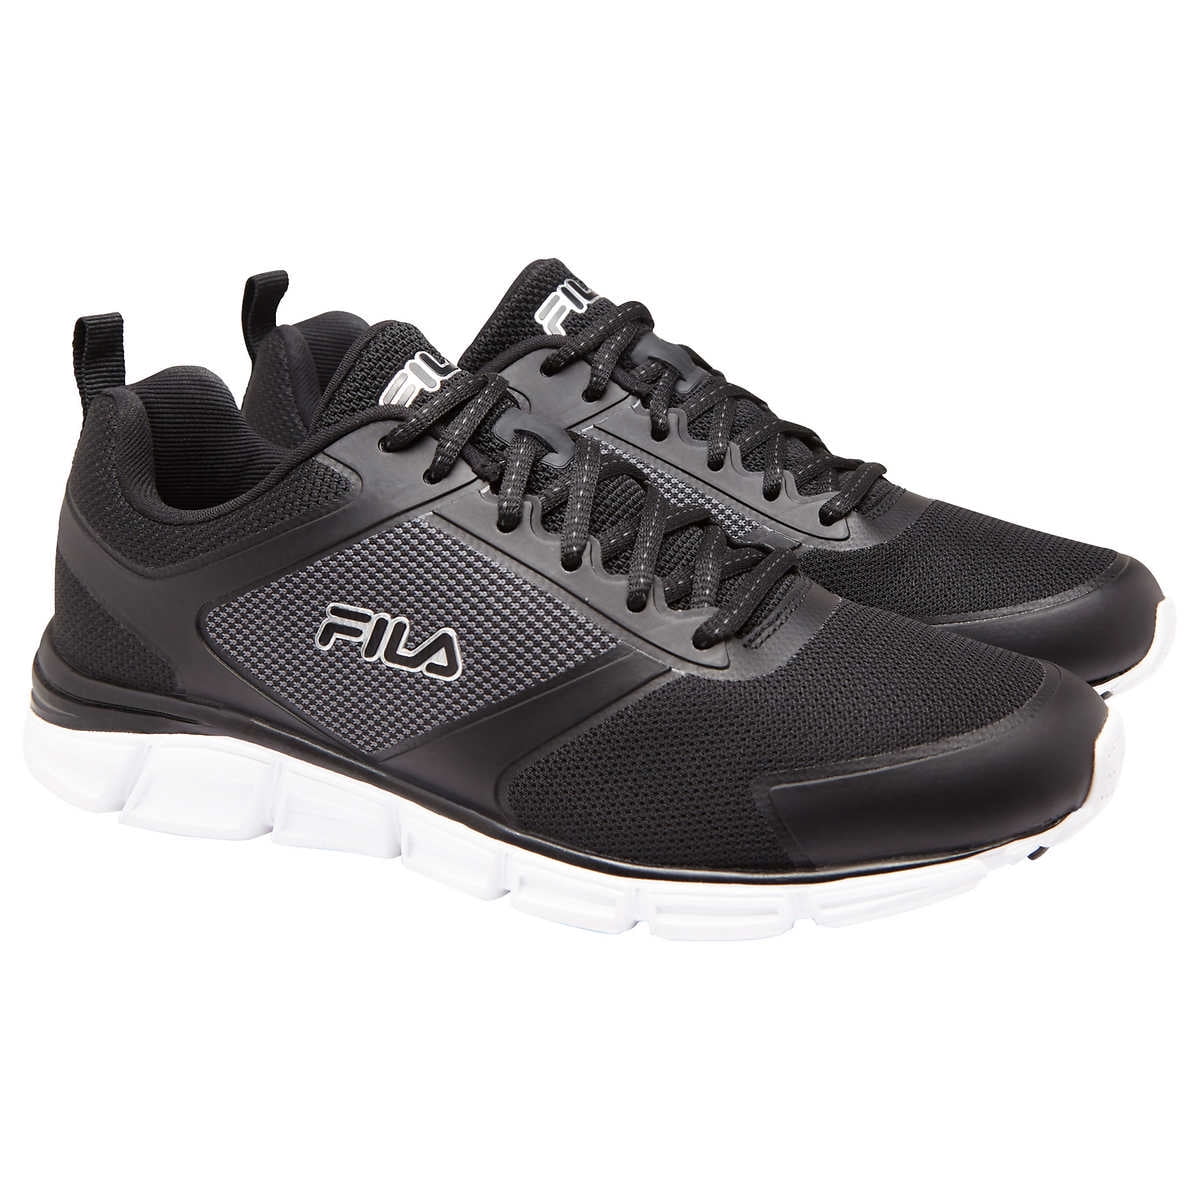 Men's Foam SteelSprint Athletic Shoes (Black, 11.5) - Walmart.com